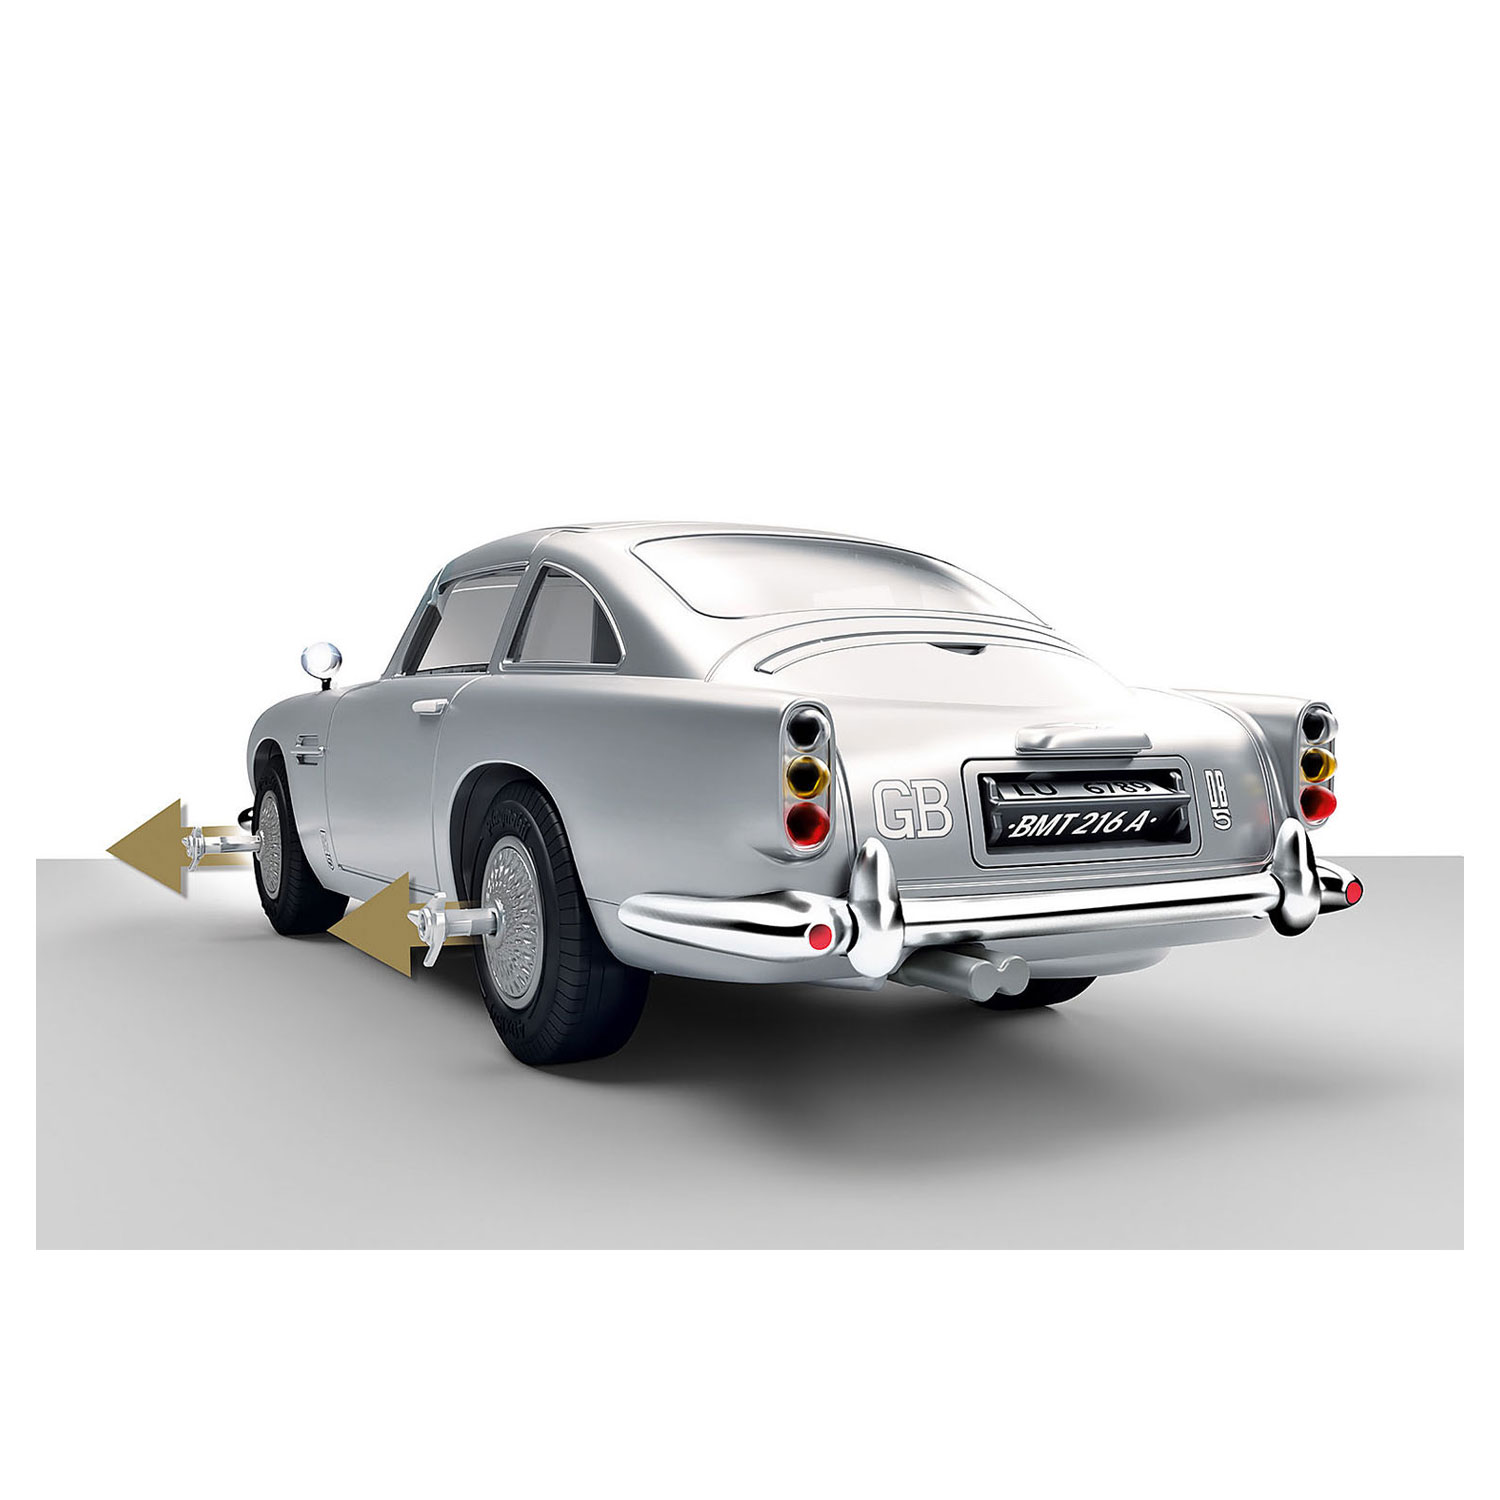 Playmobil James Bond Aston Martin DB5 Goldfinger - 70578